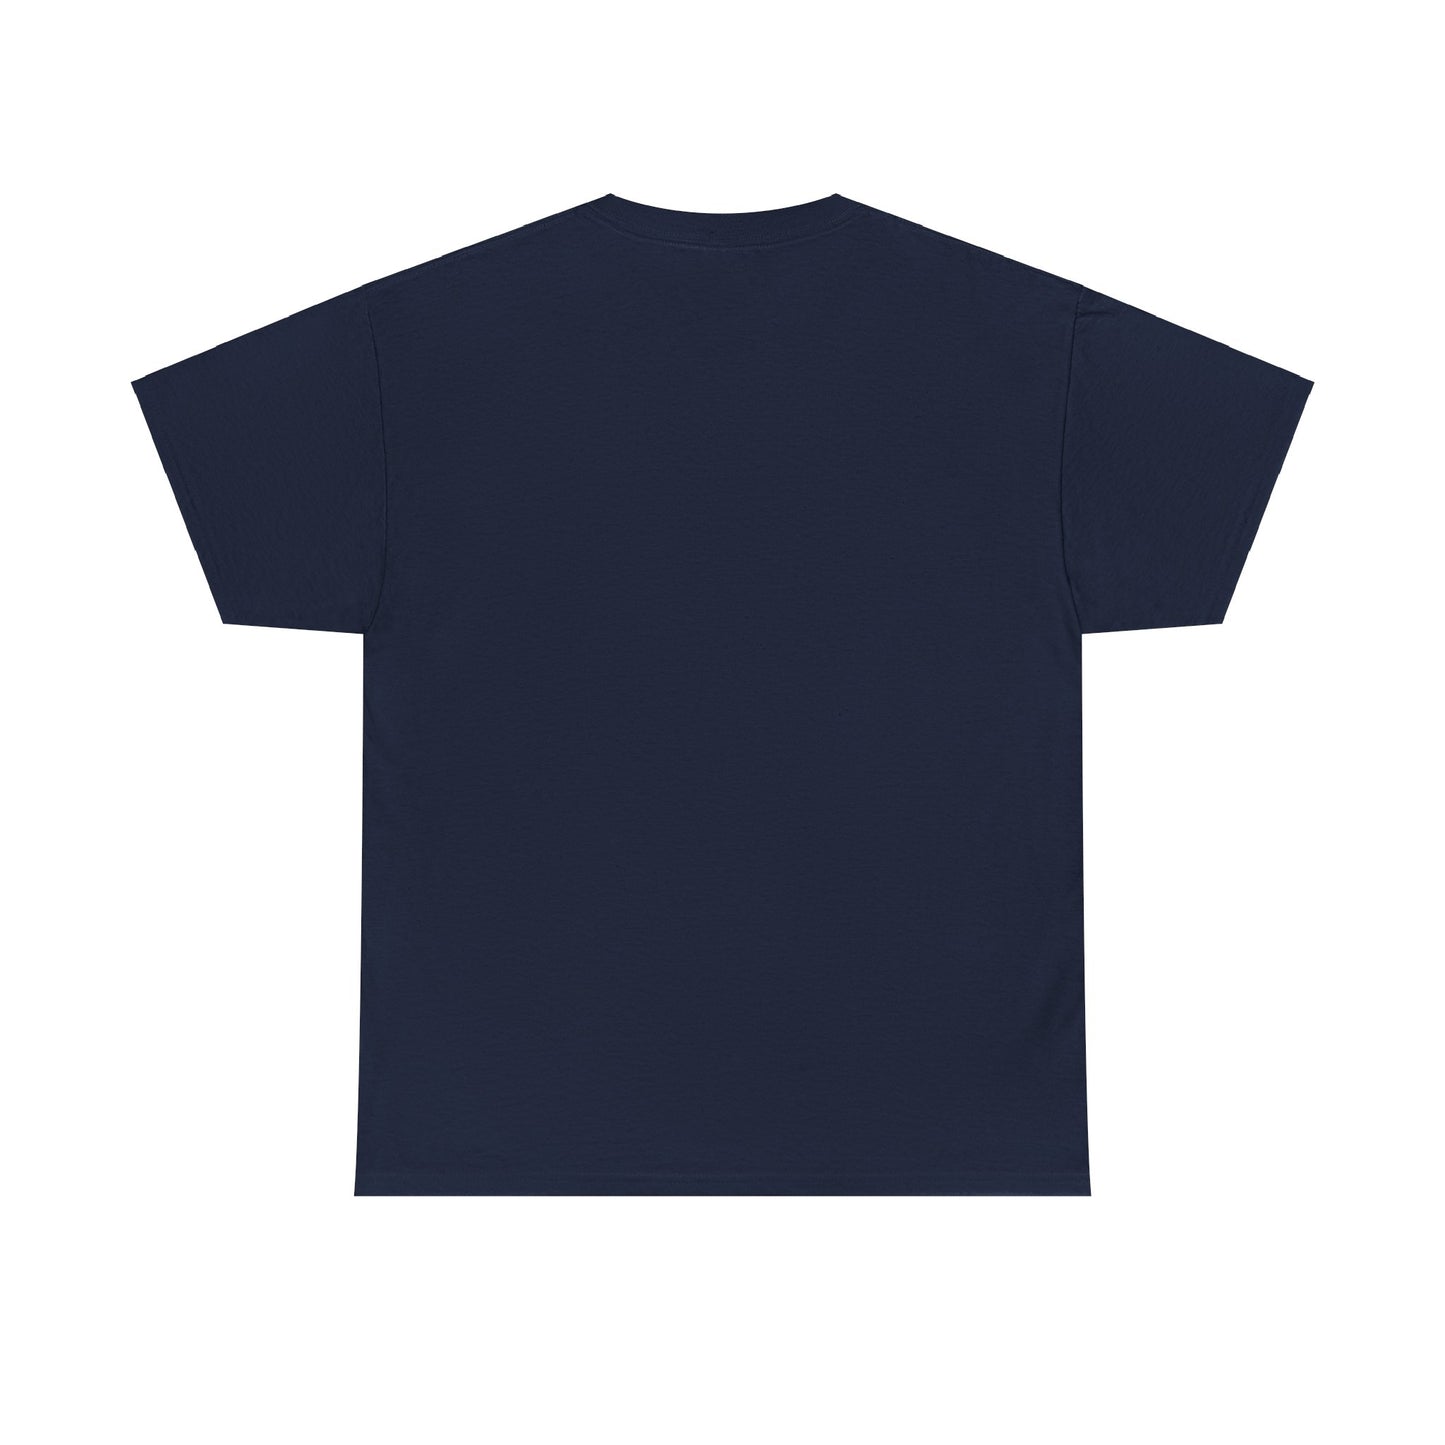 Unisex Heavy Cotton Graphic design T-shirt